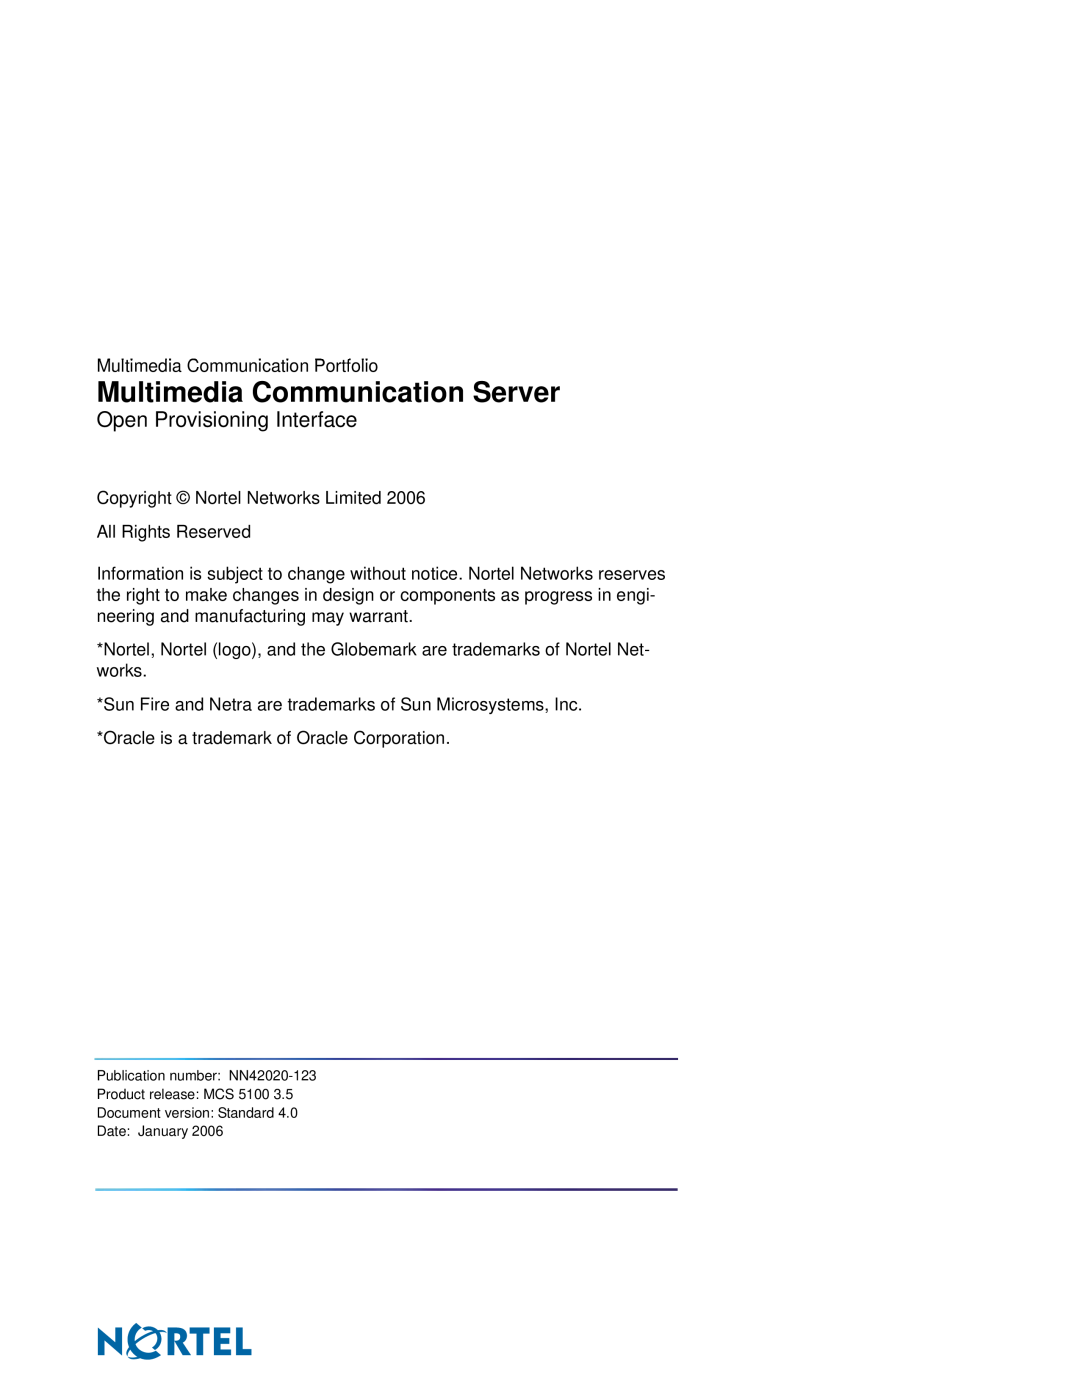 Nortel Networks NN42020-123 manual Multimedia Communication Server, Open Provisioning Interface 